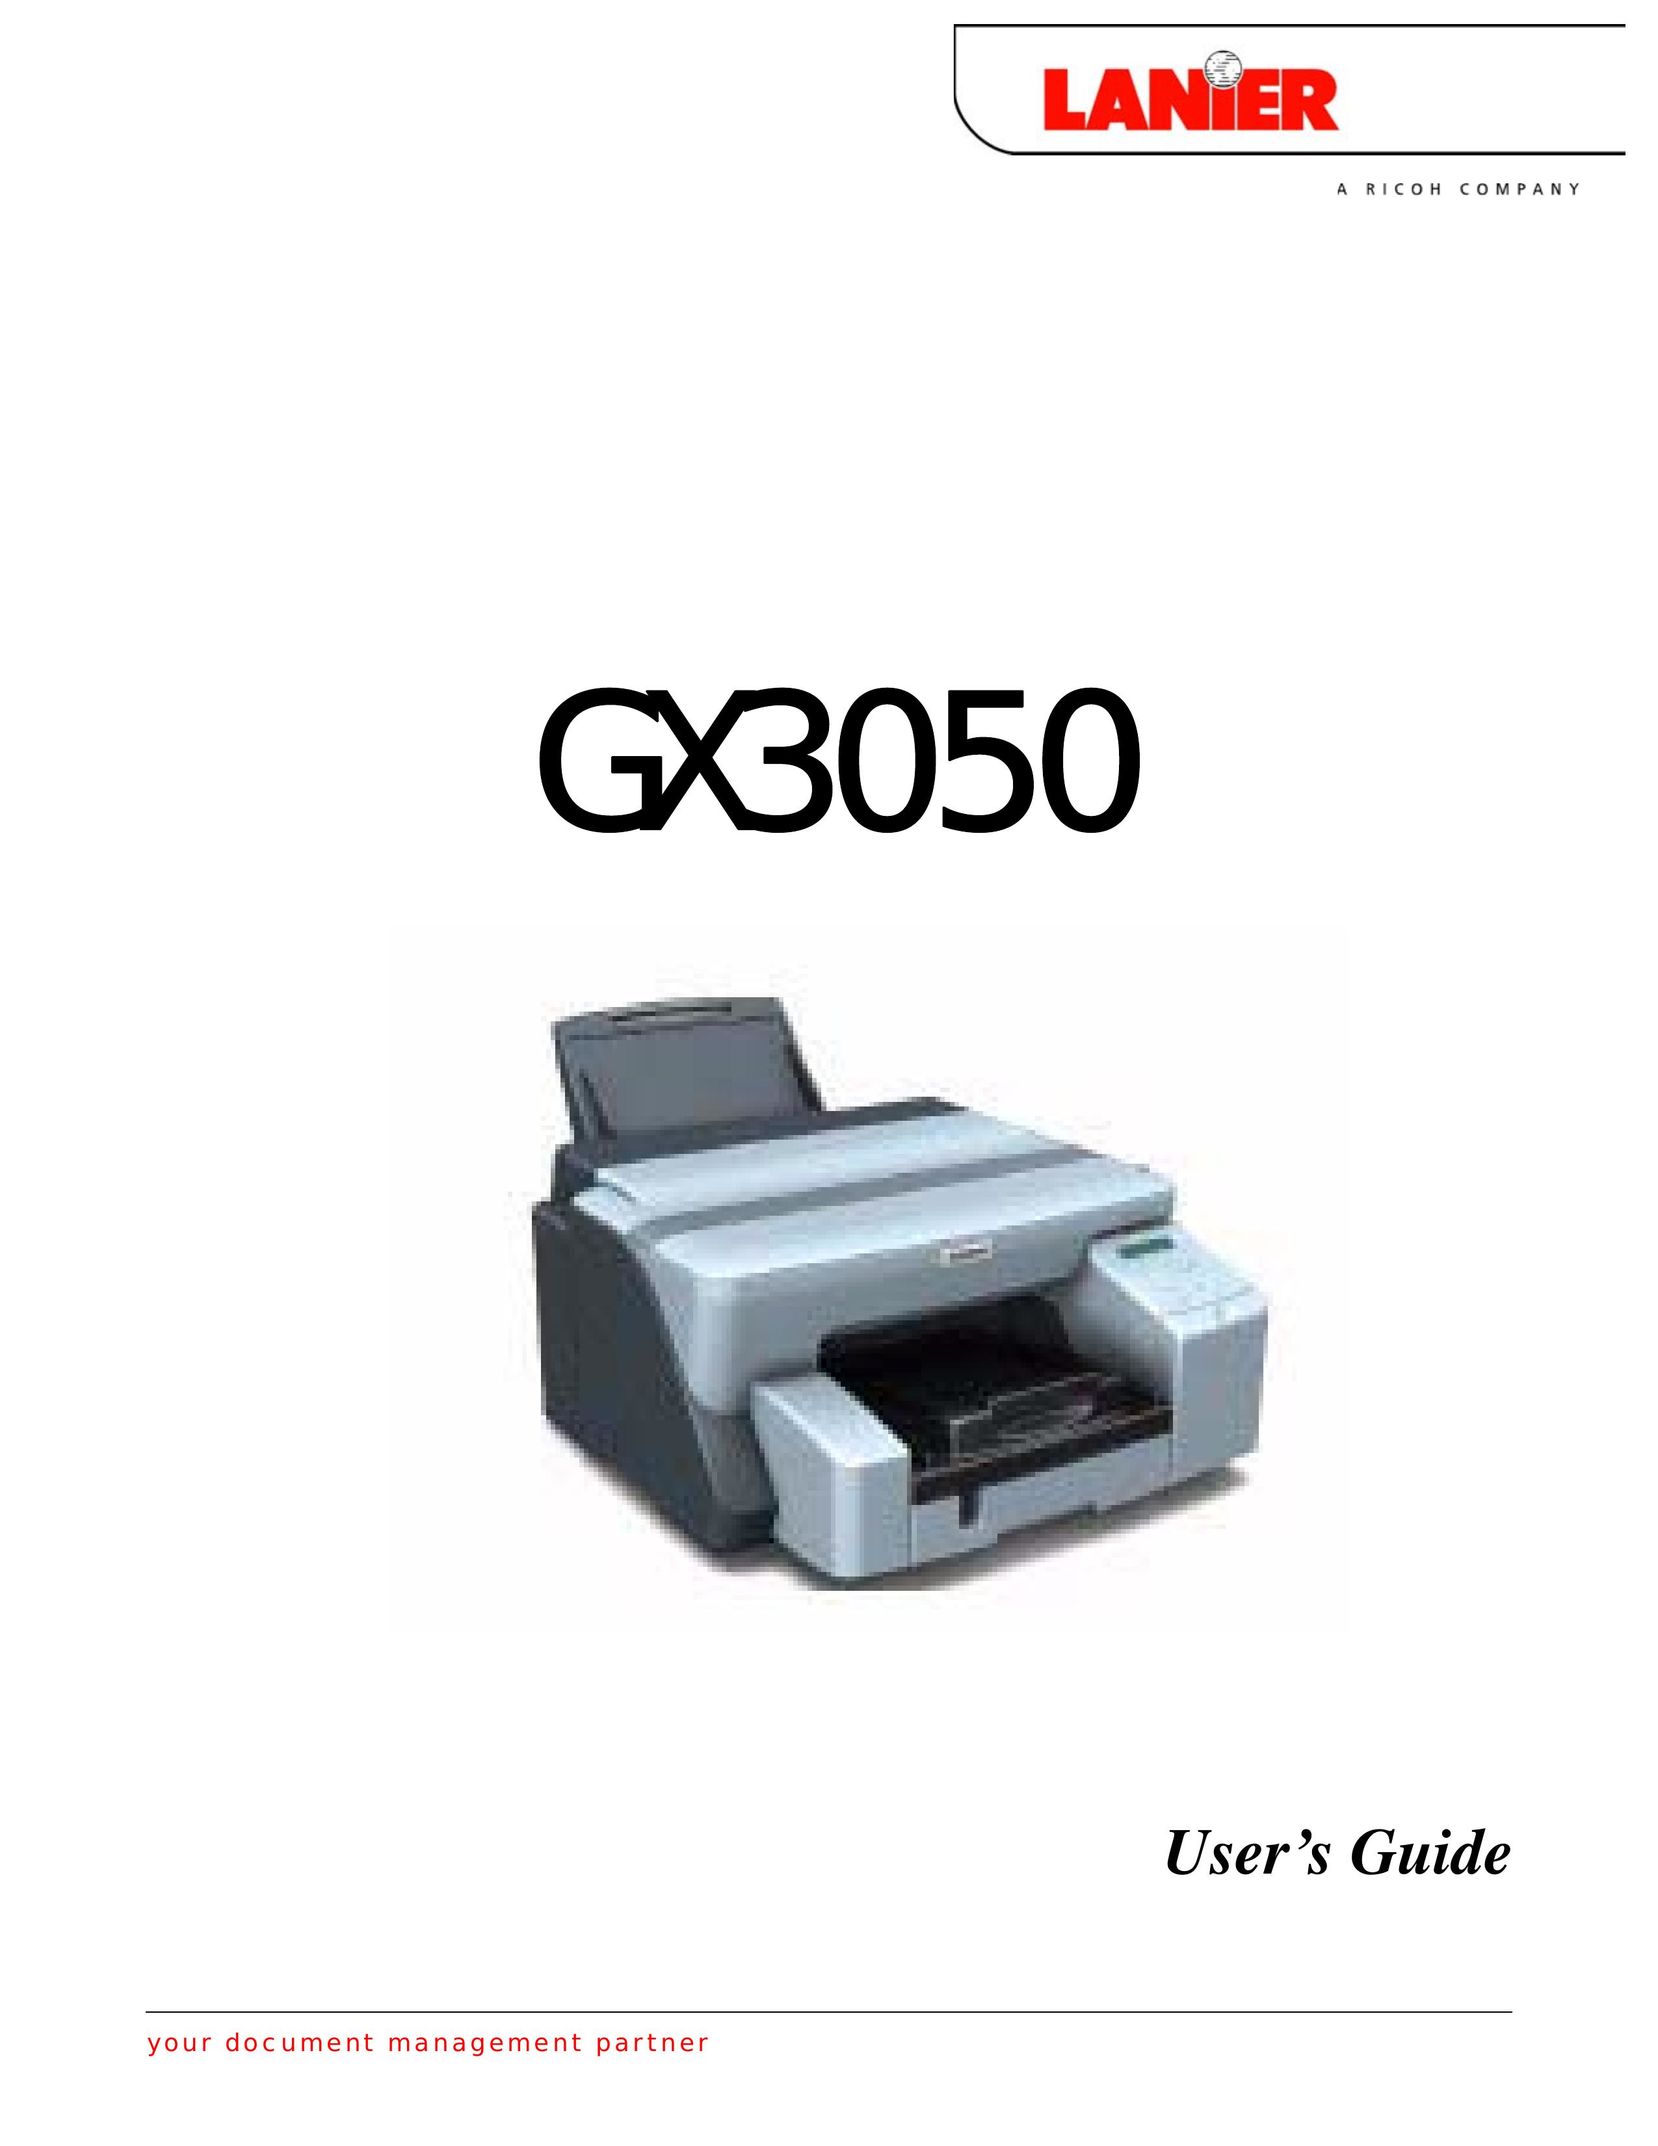 Lanier GX3050 Printer User Manual